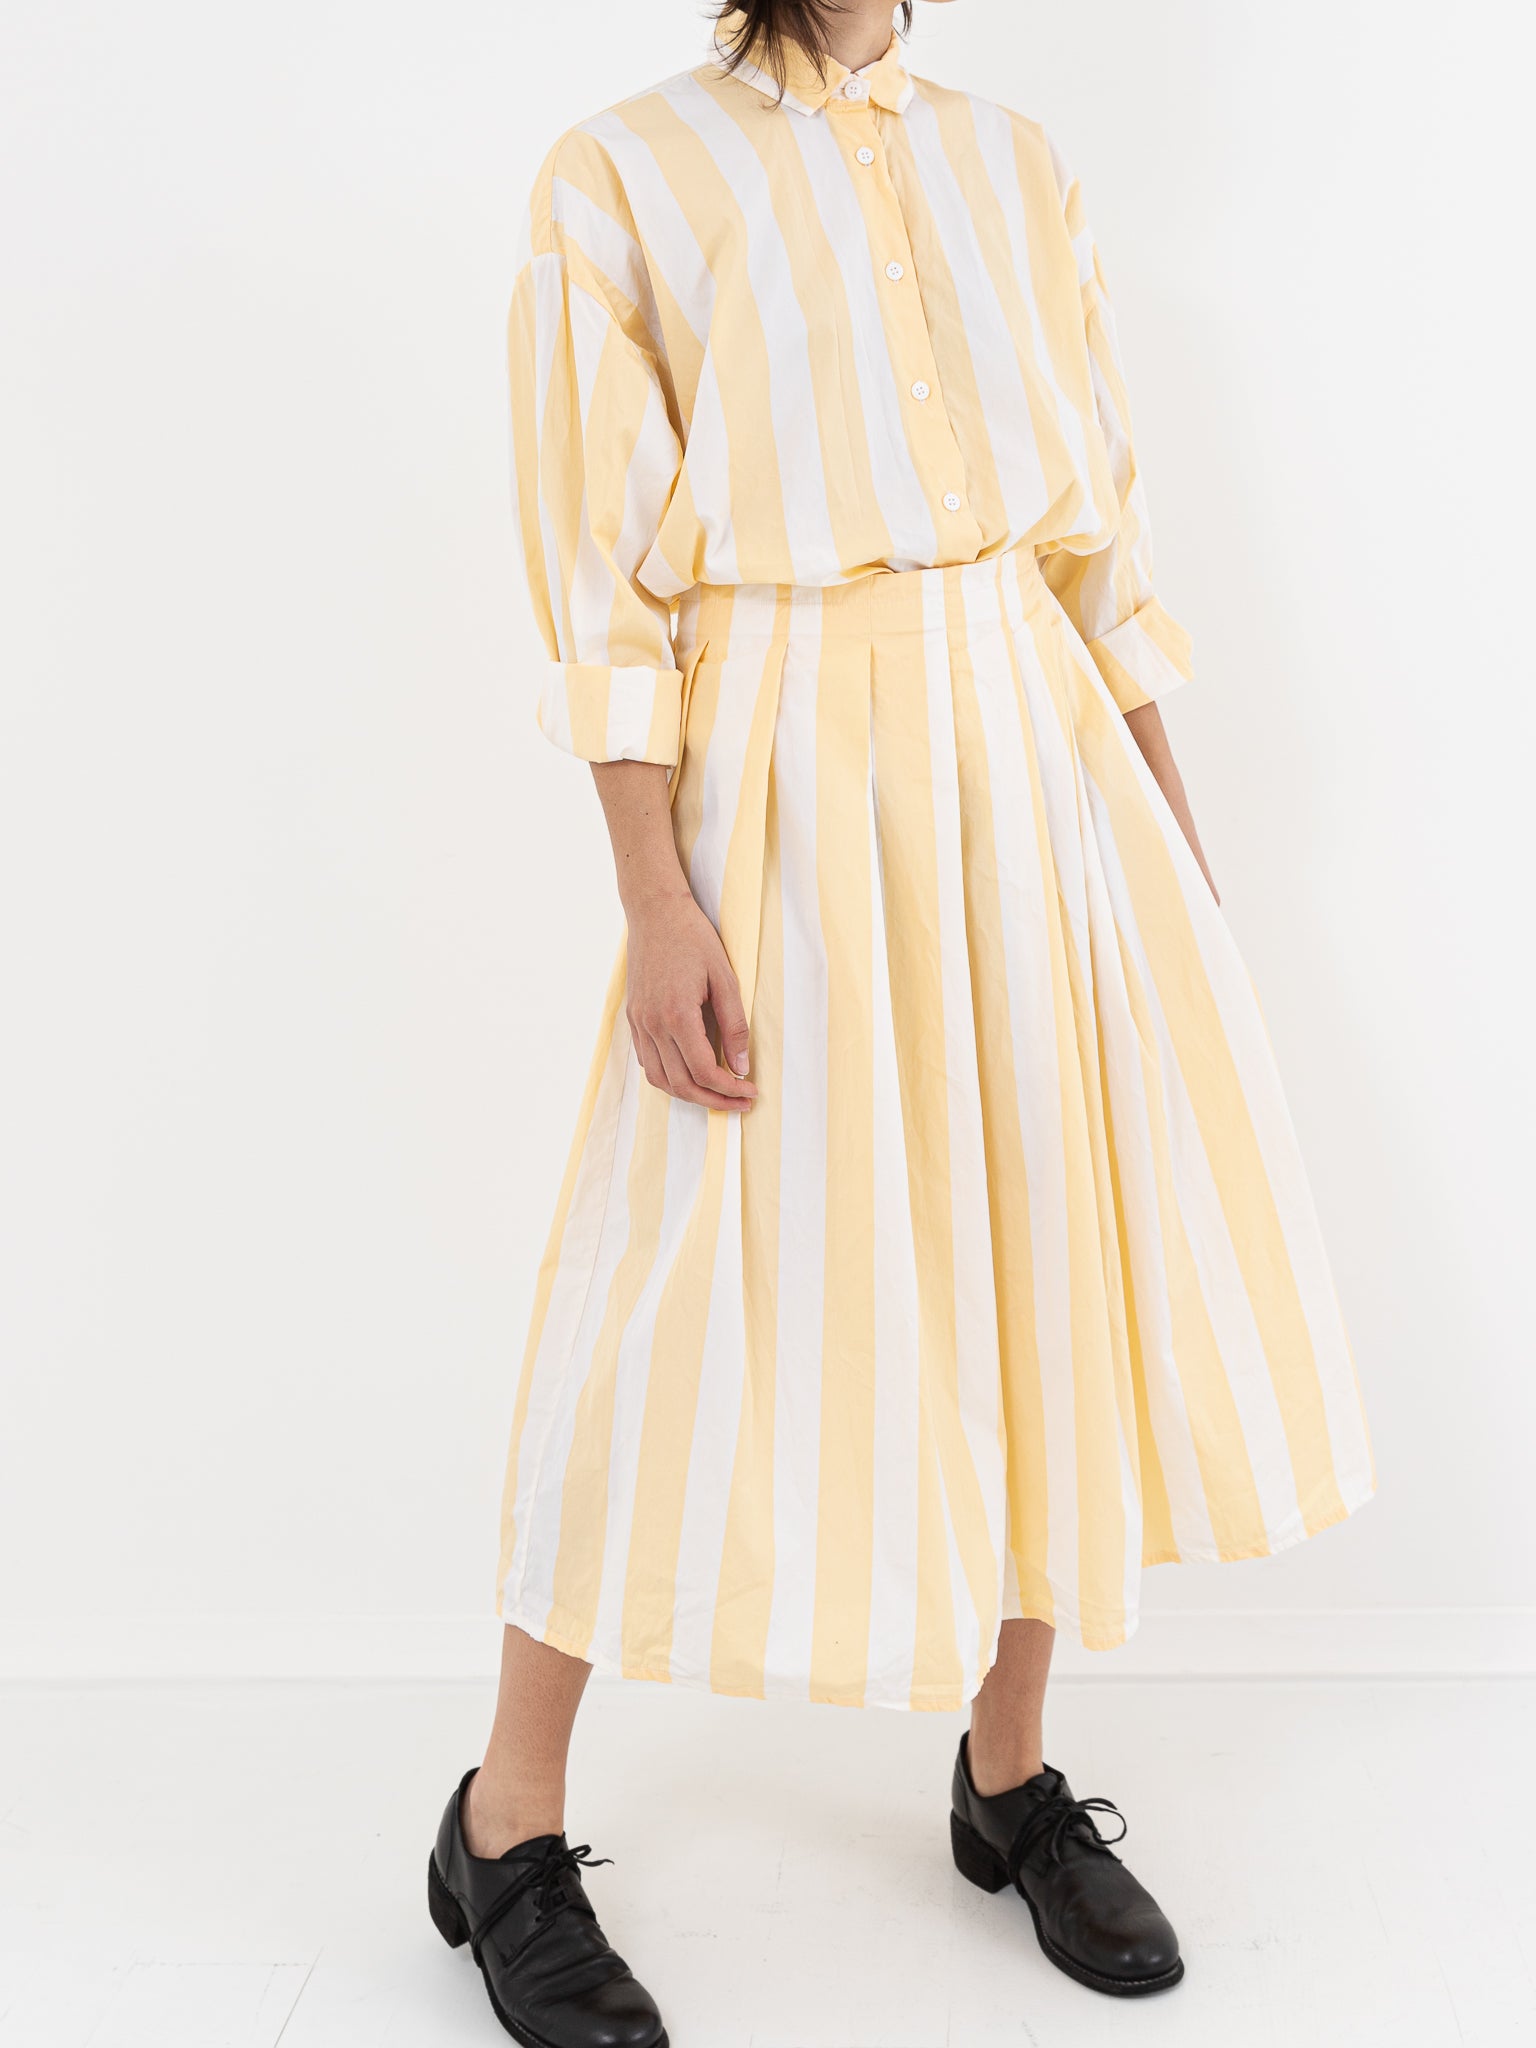 Bergfabel Matilde Skirt, Yellow Stripe - Worthwhile, Inc.